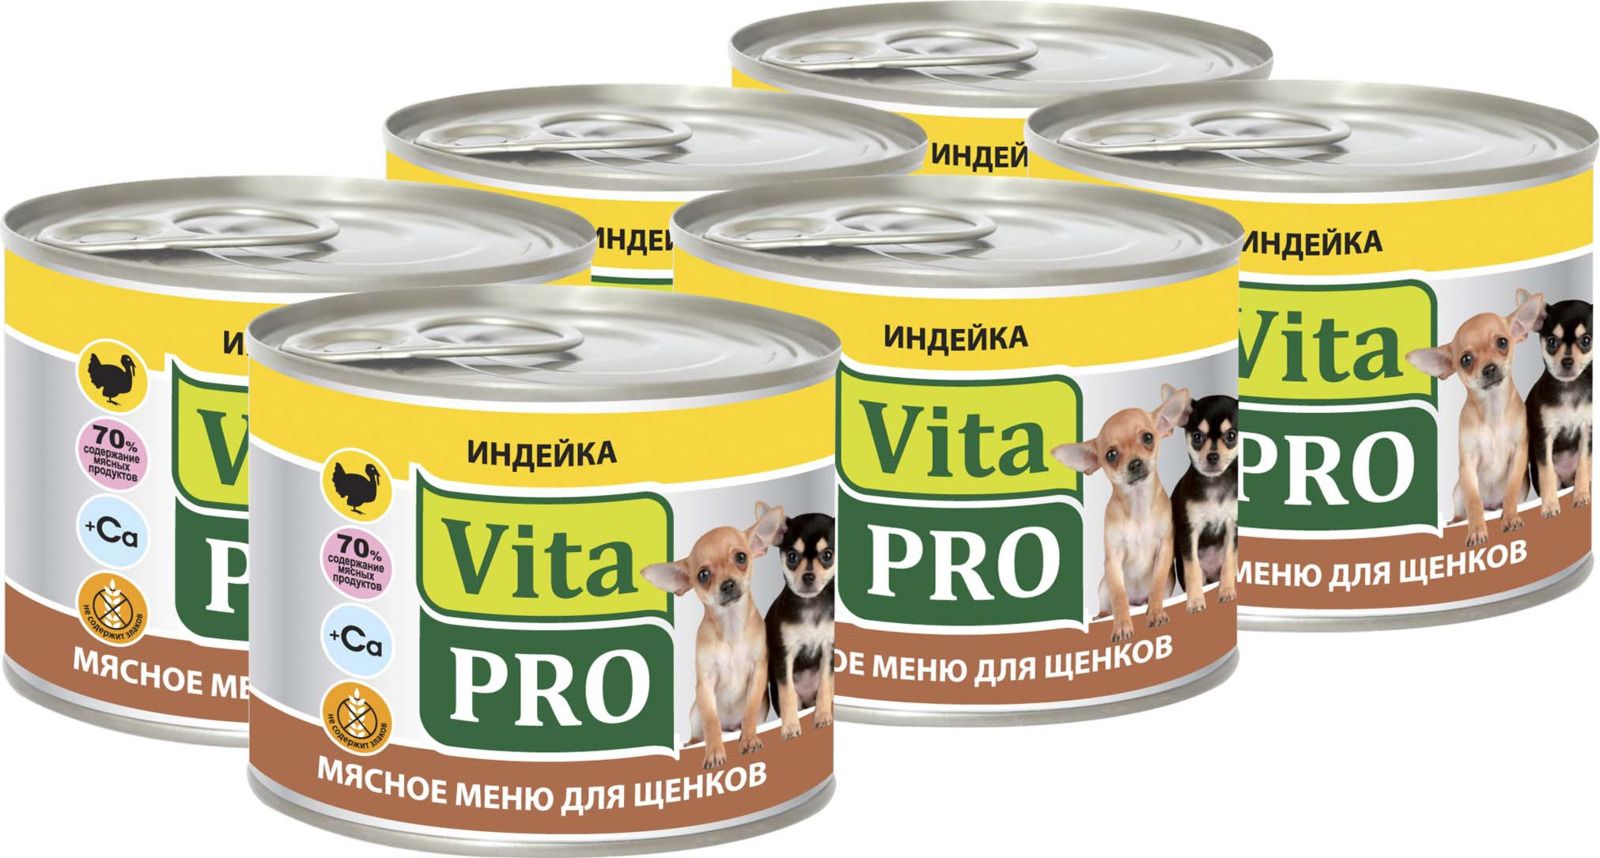   Vita Pro  ,  , , 6   200 